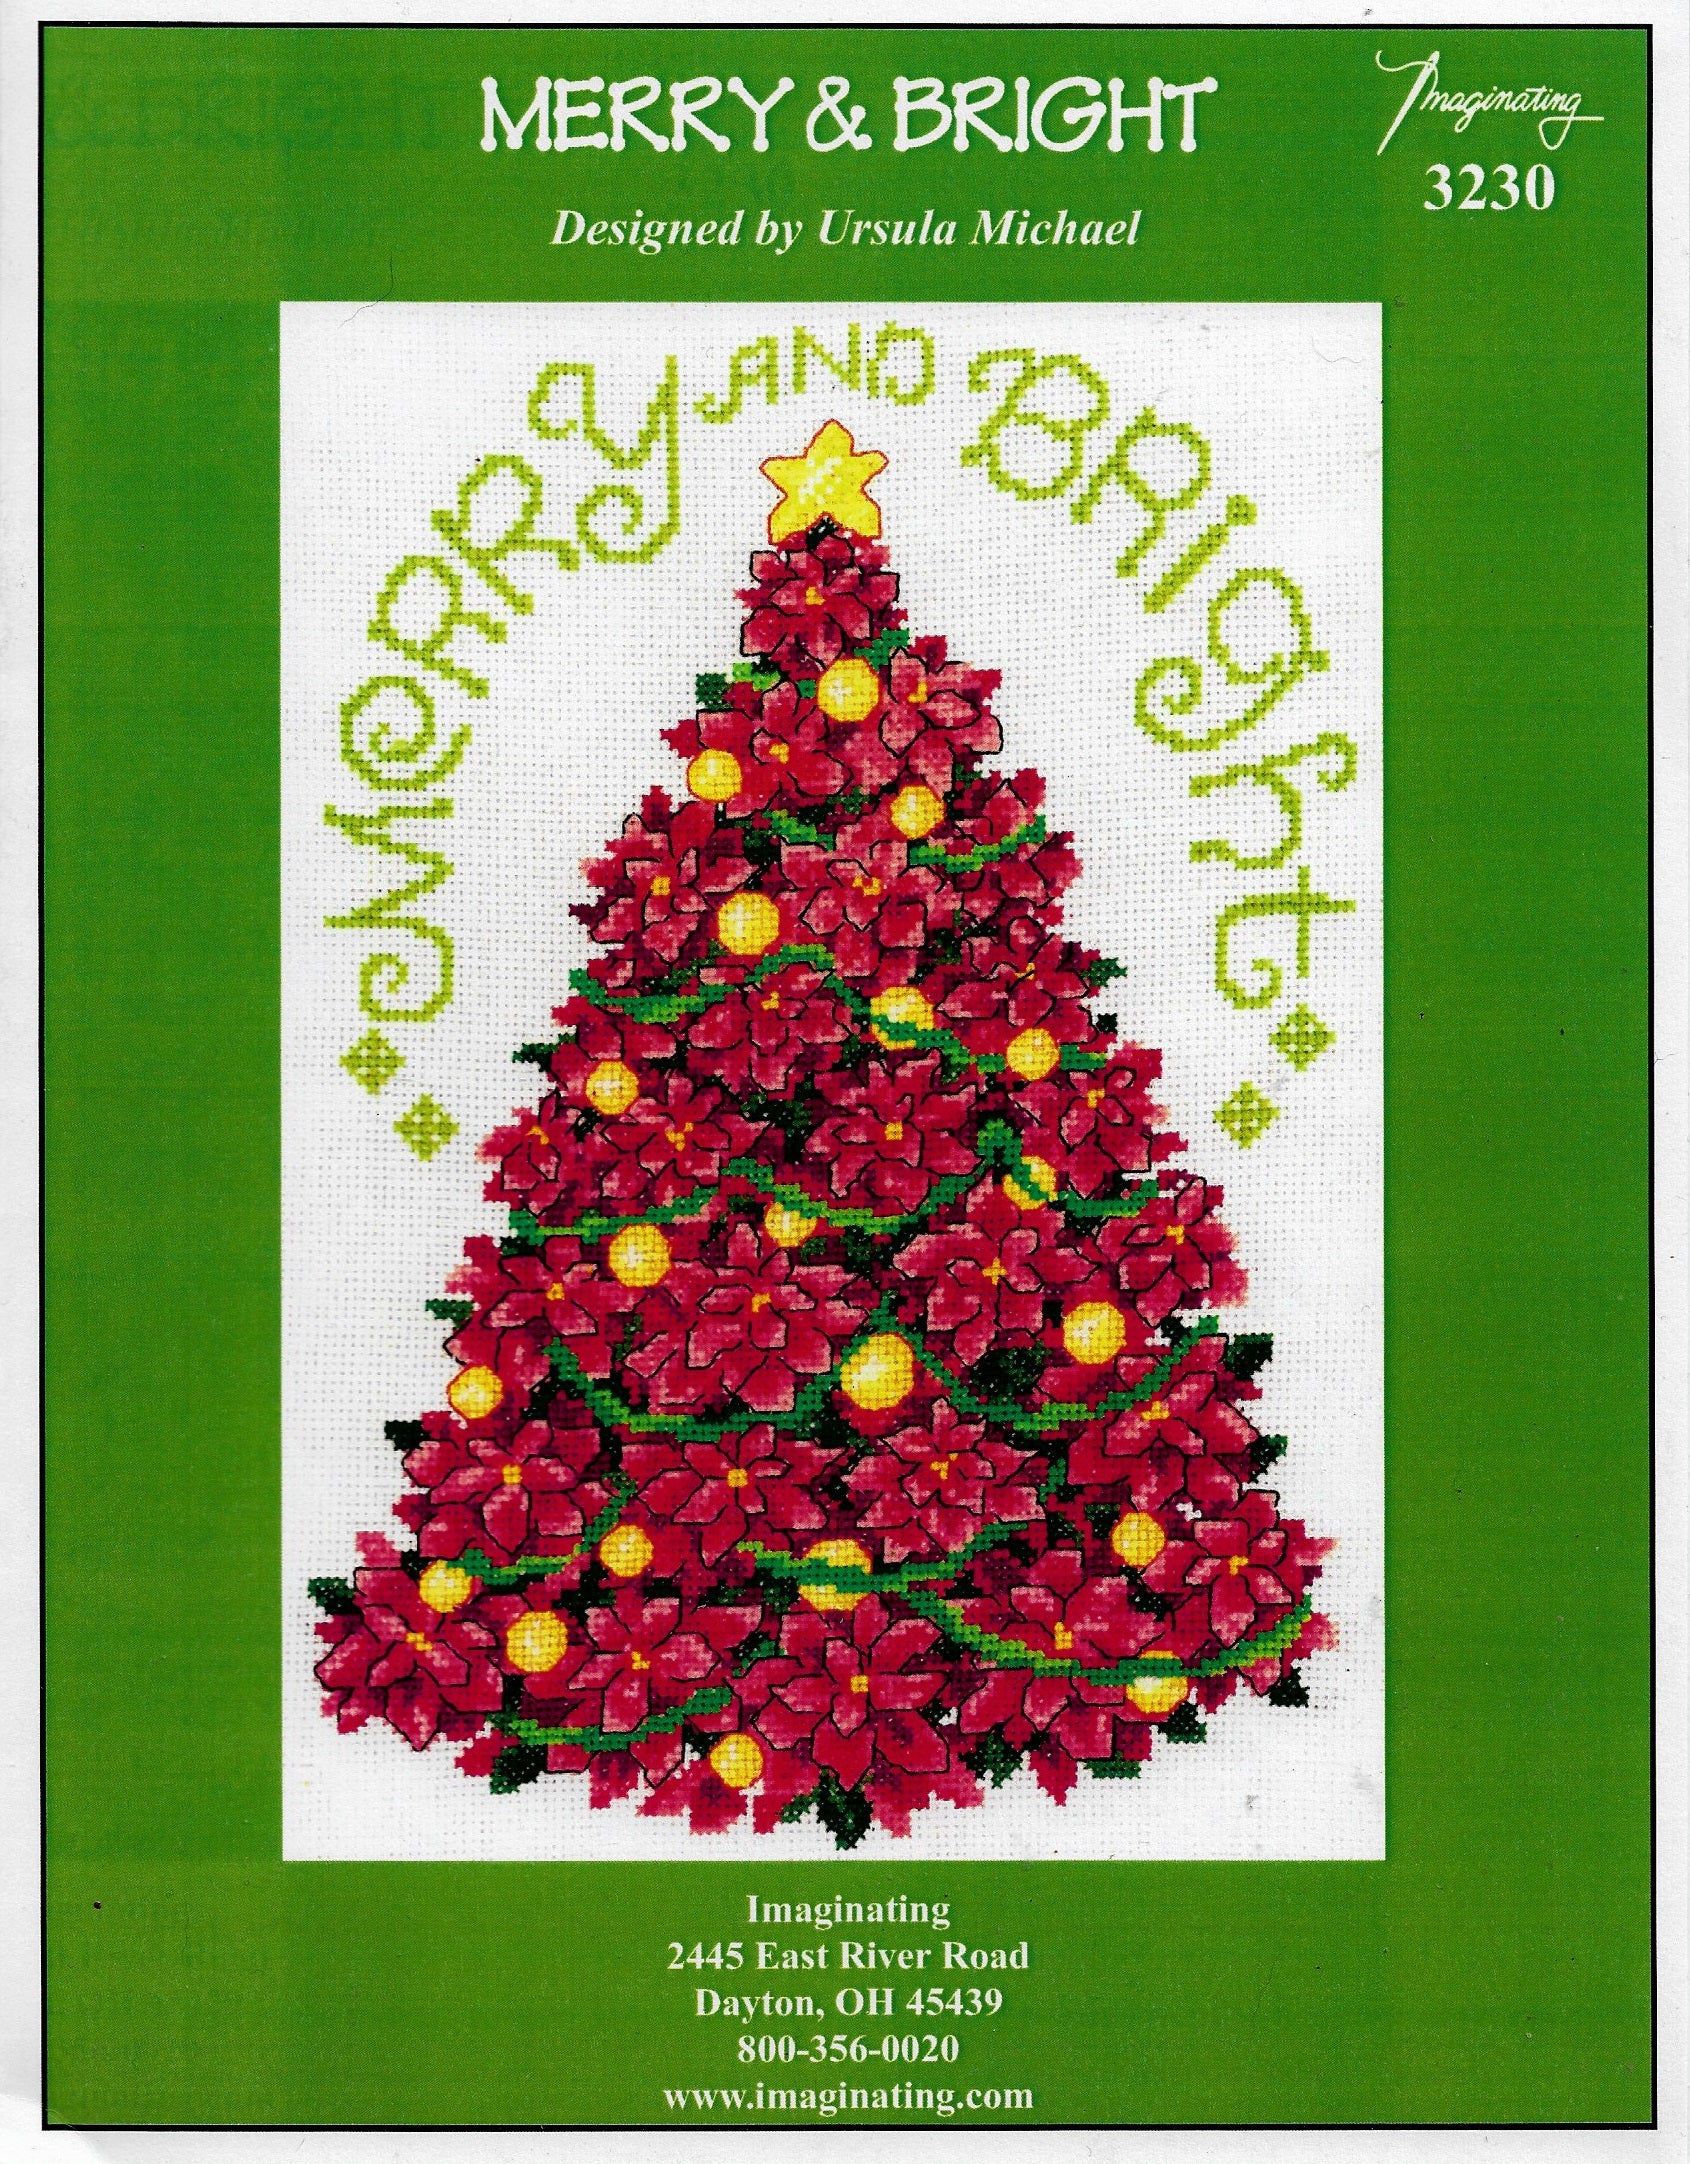 Imaginating Merry & Bright Christmas Tree cross stitch pattern